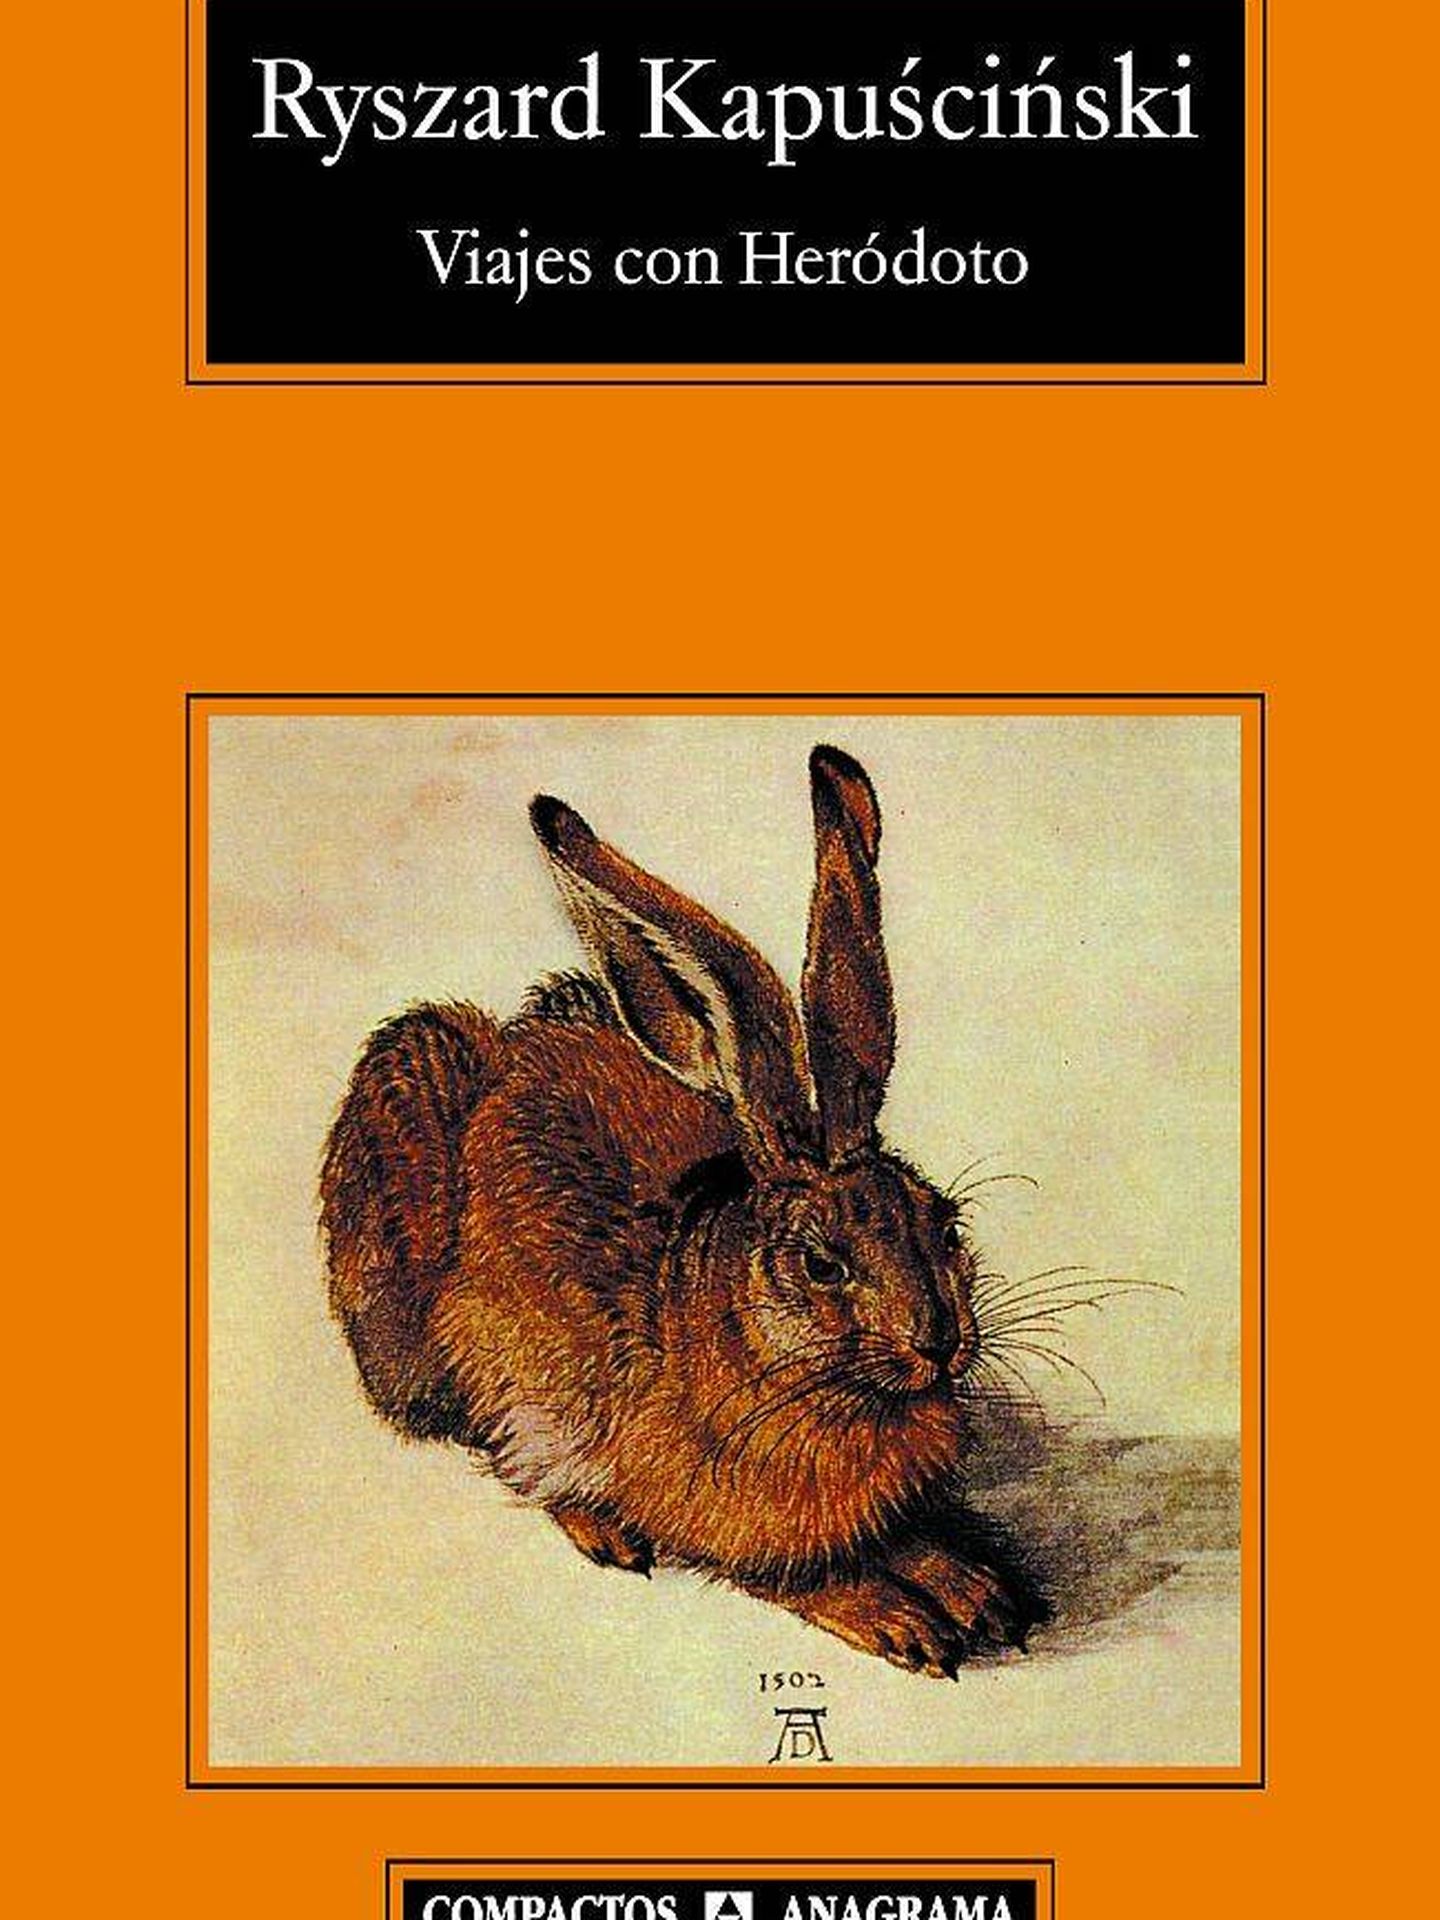 'Viajes con Heródoto'.